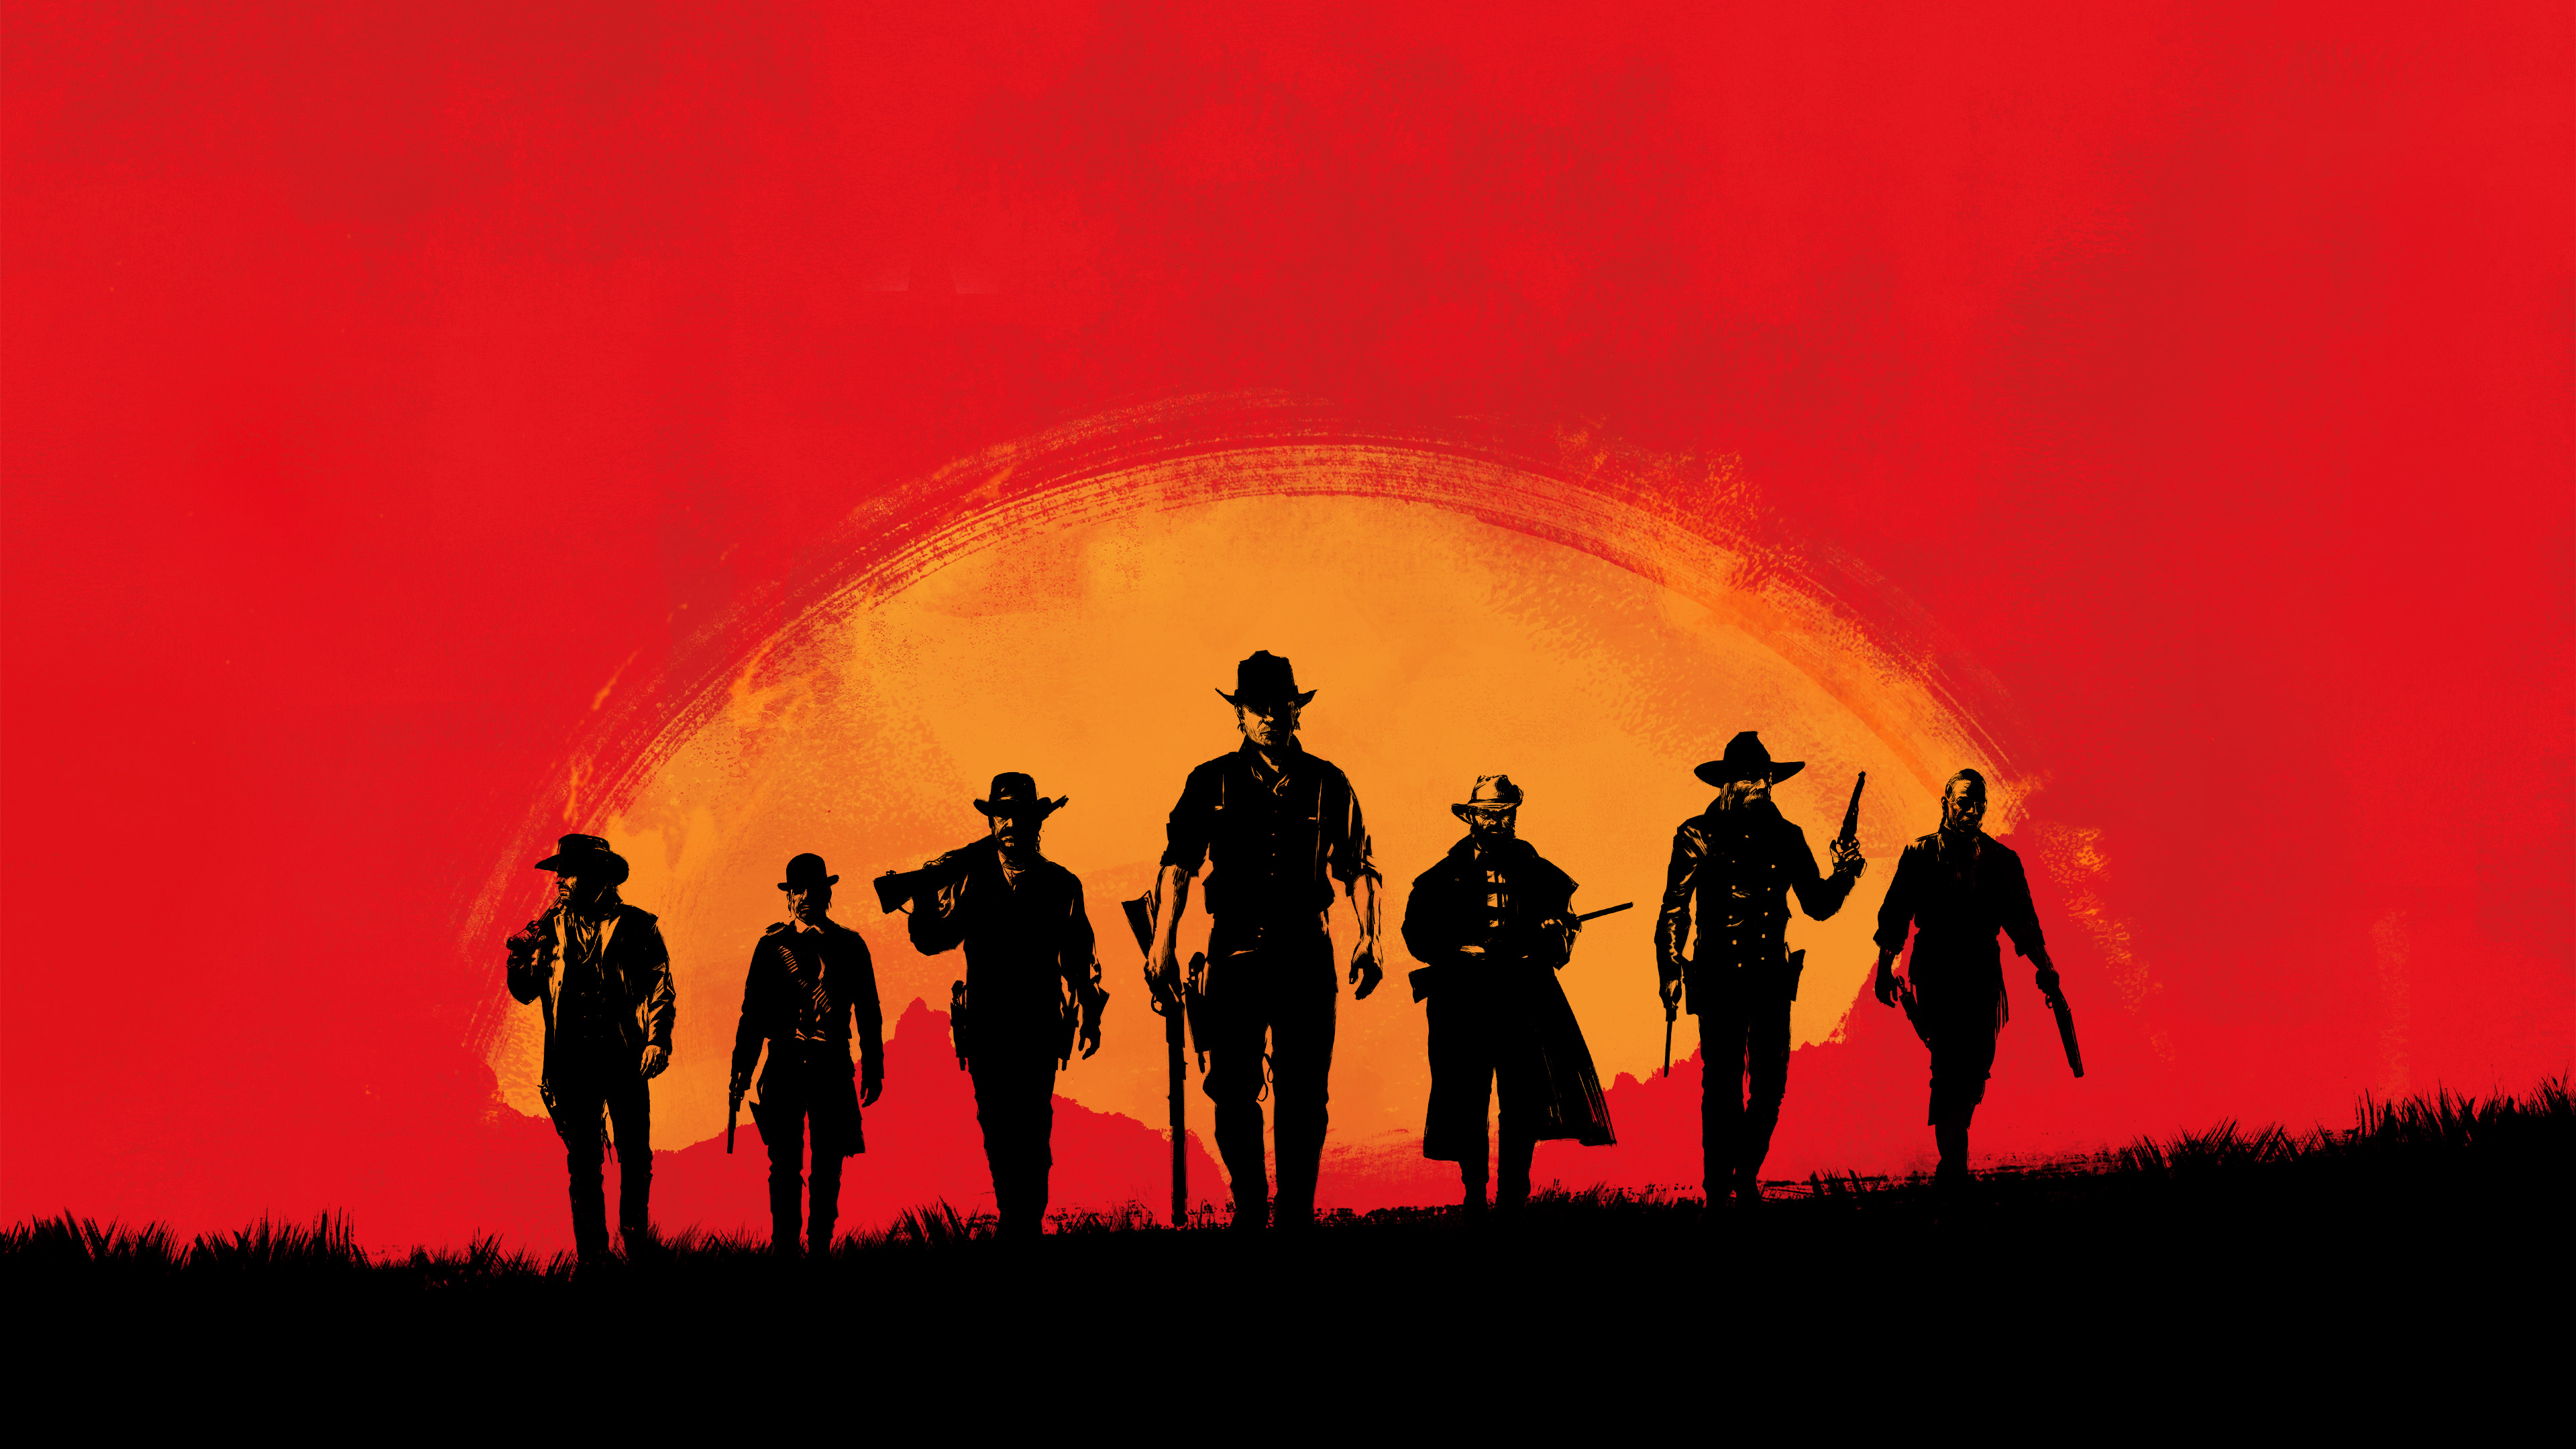 Red Dead Redemption 2 Art